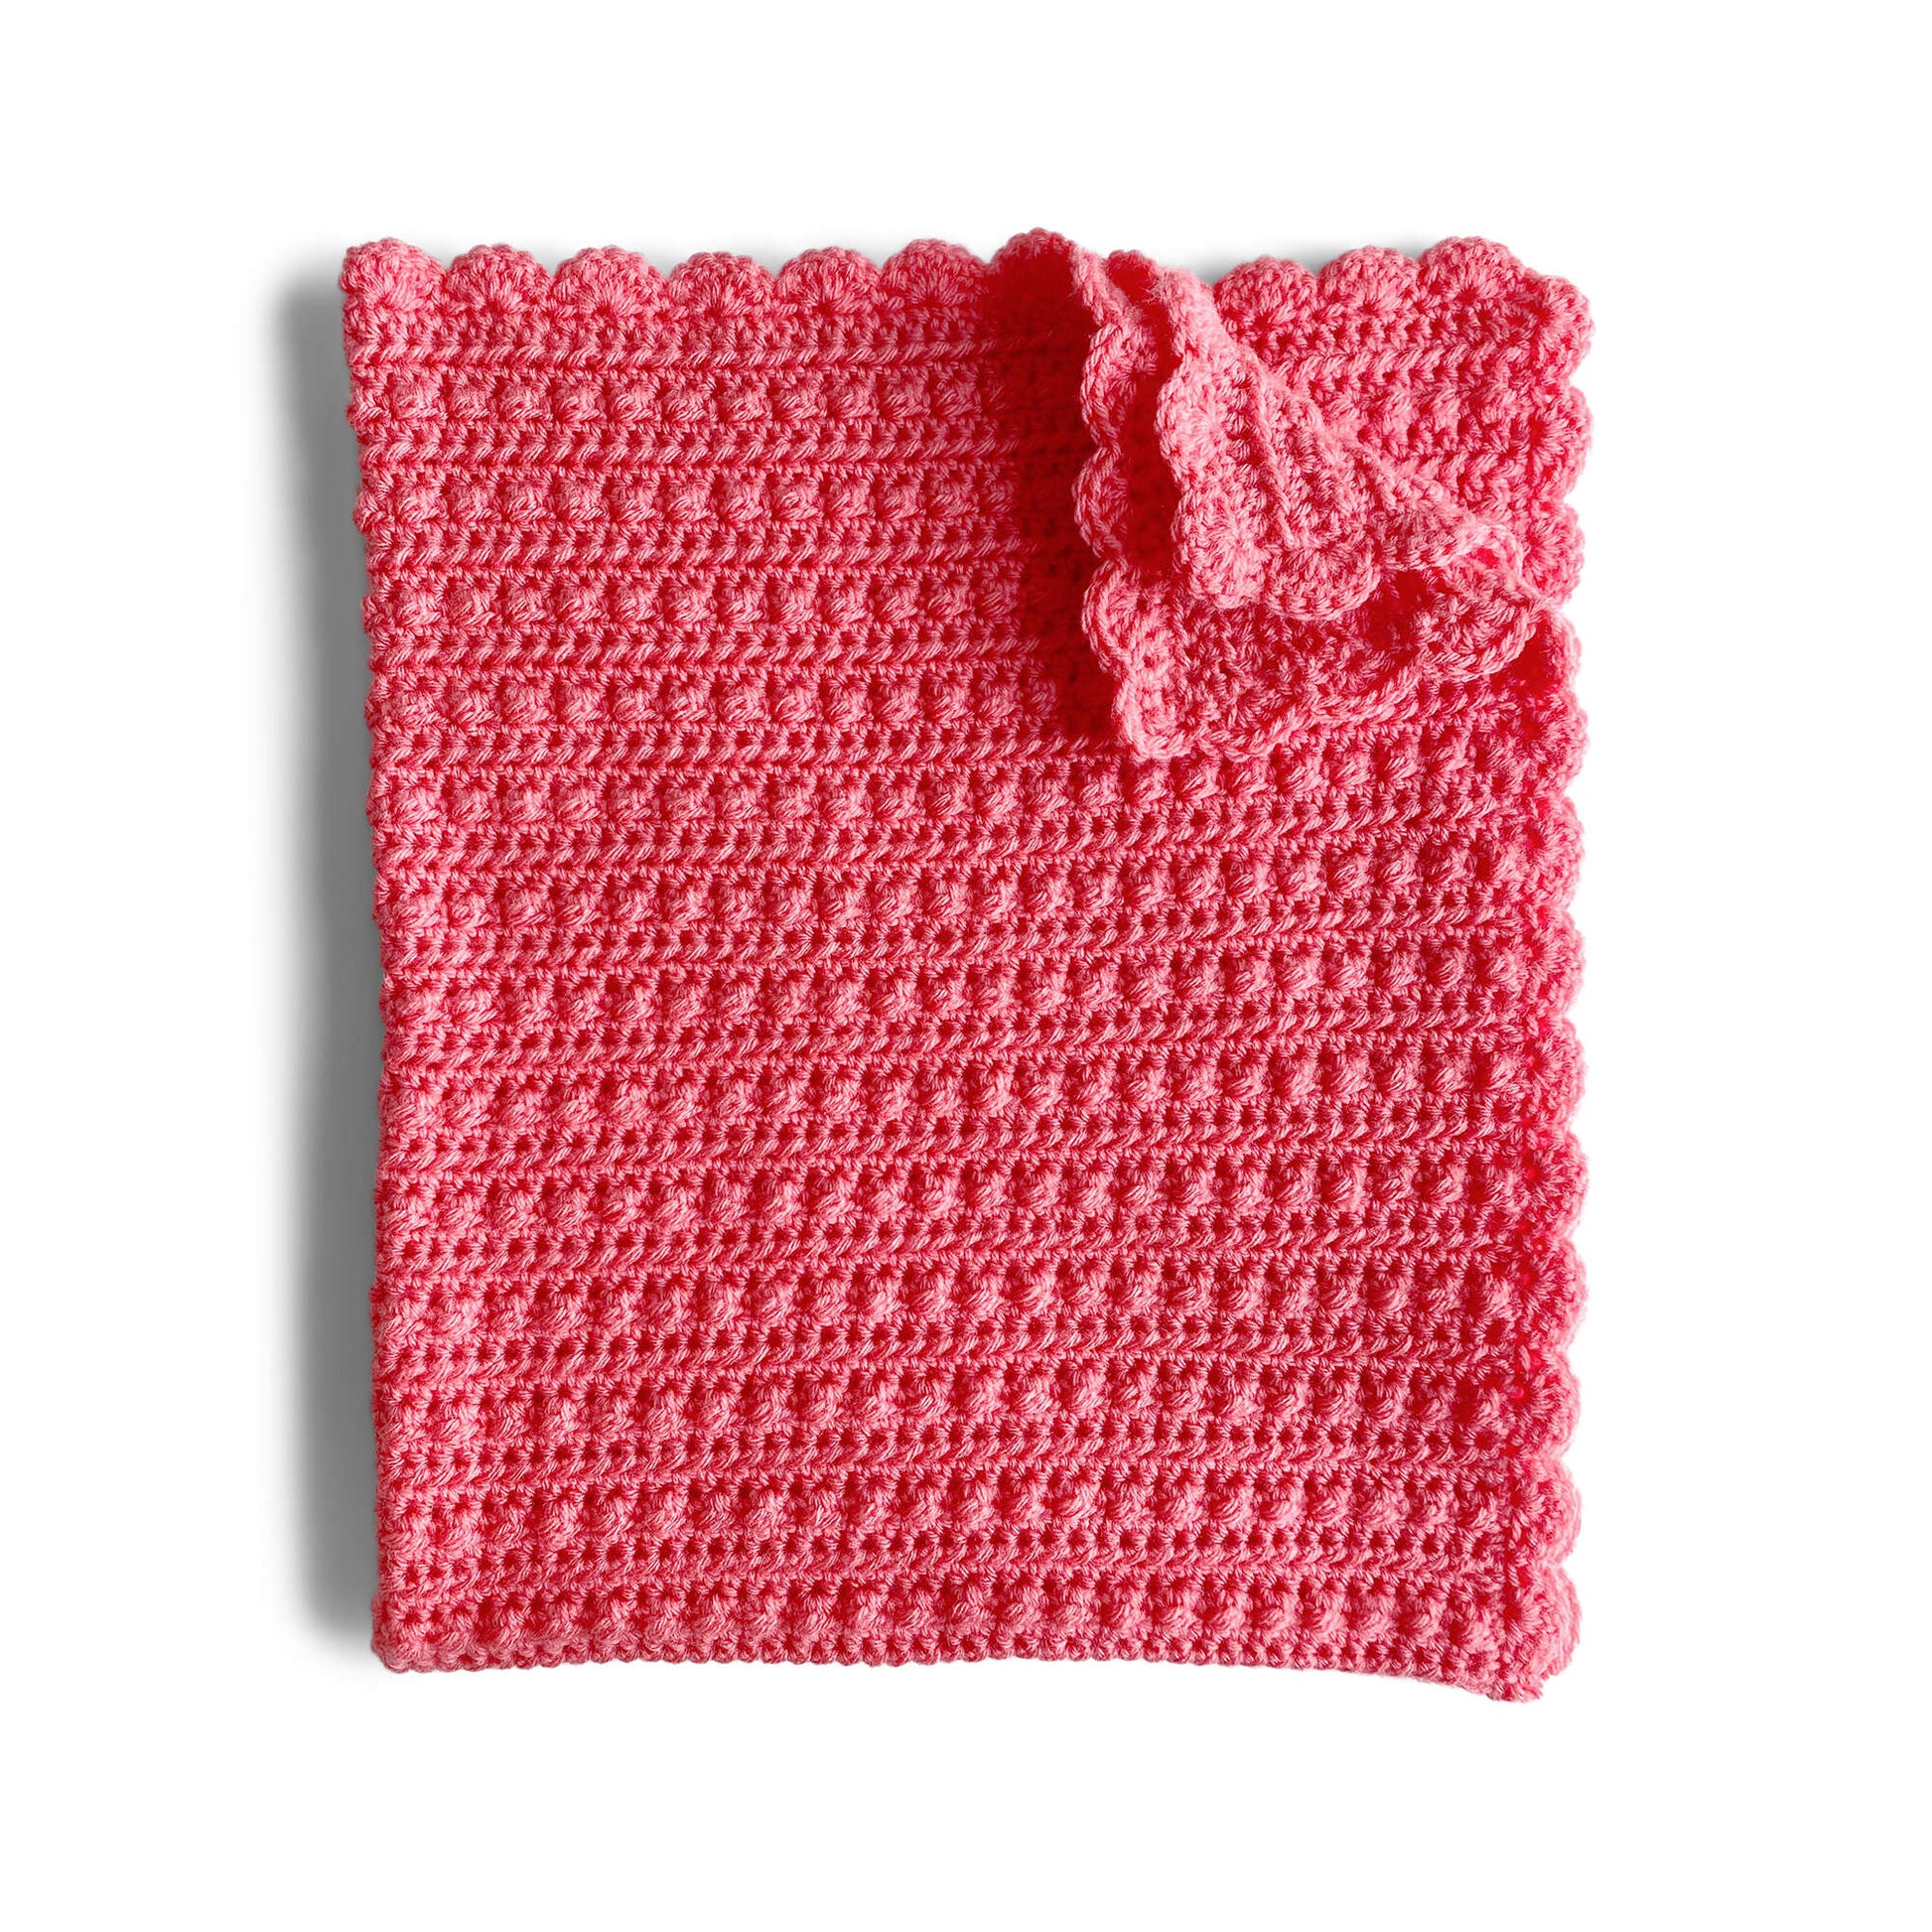 Free Red Heart Crochet Sweet Berries Baby Blanket Pattern